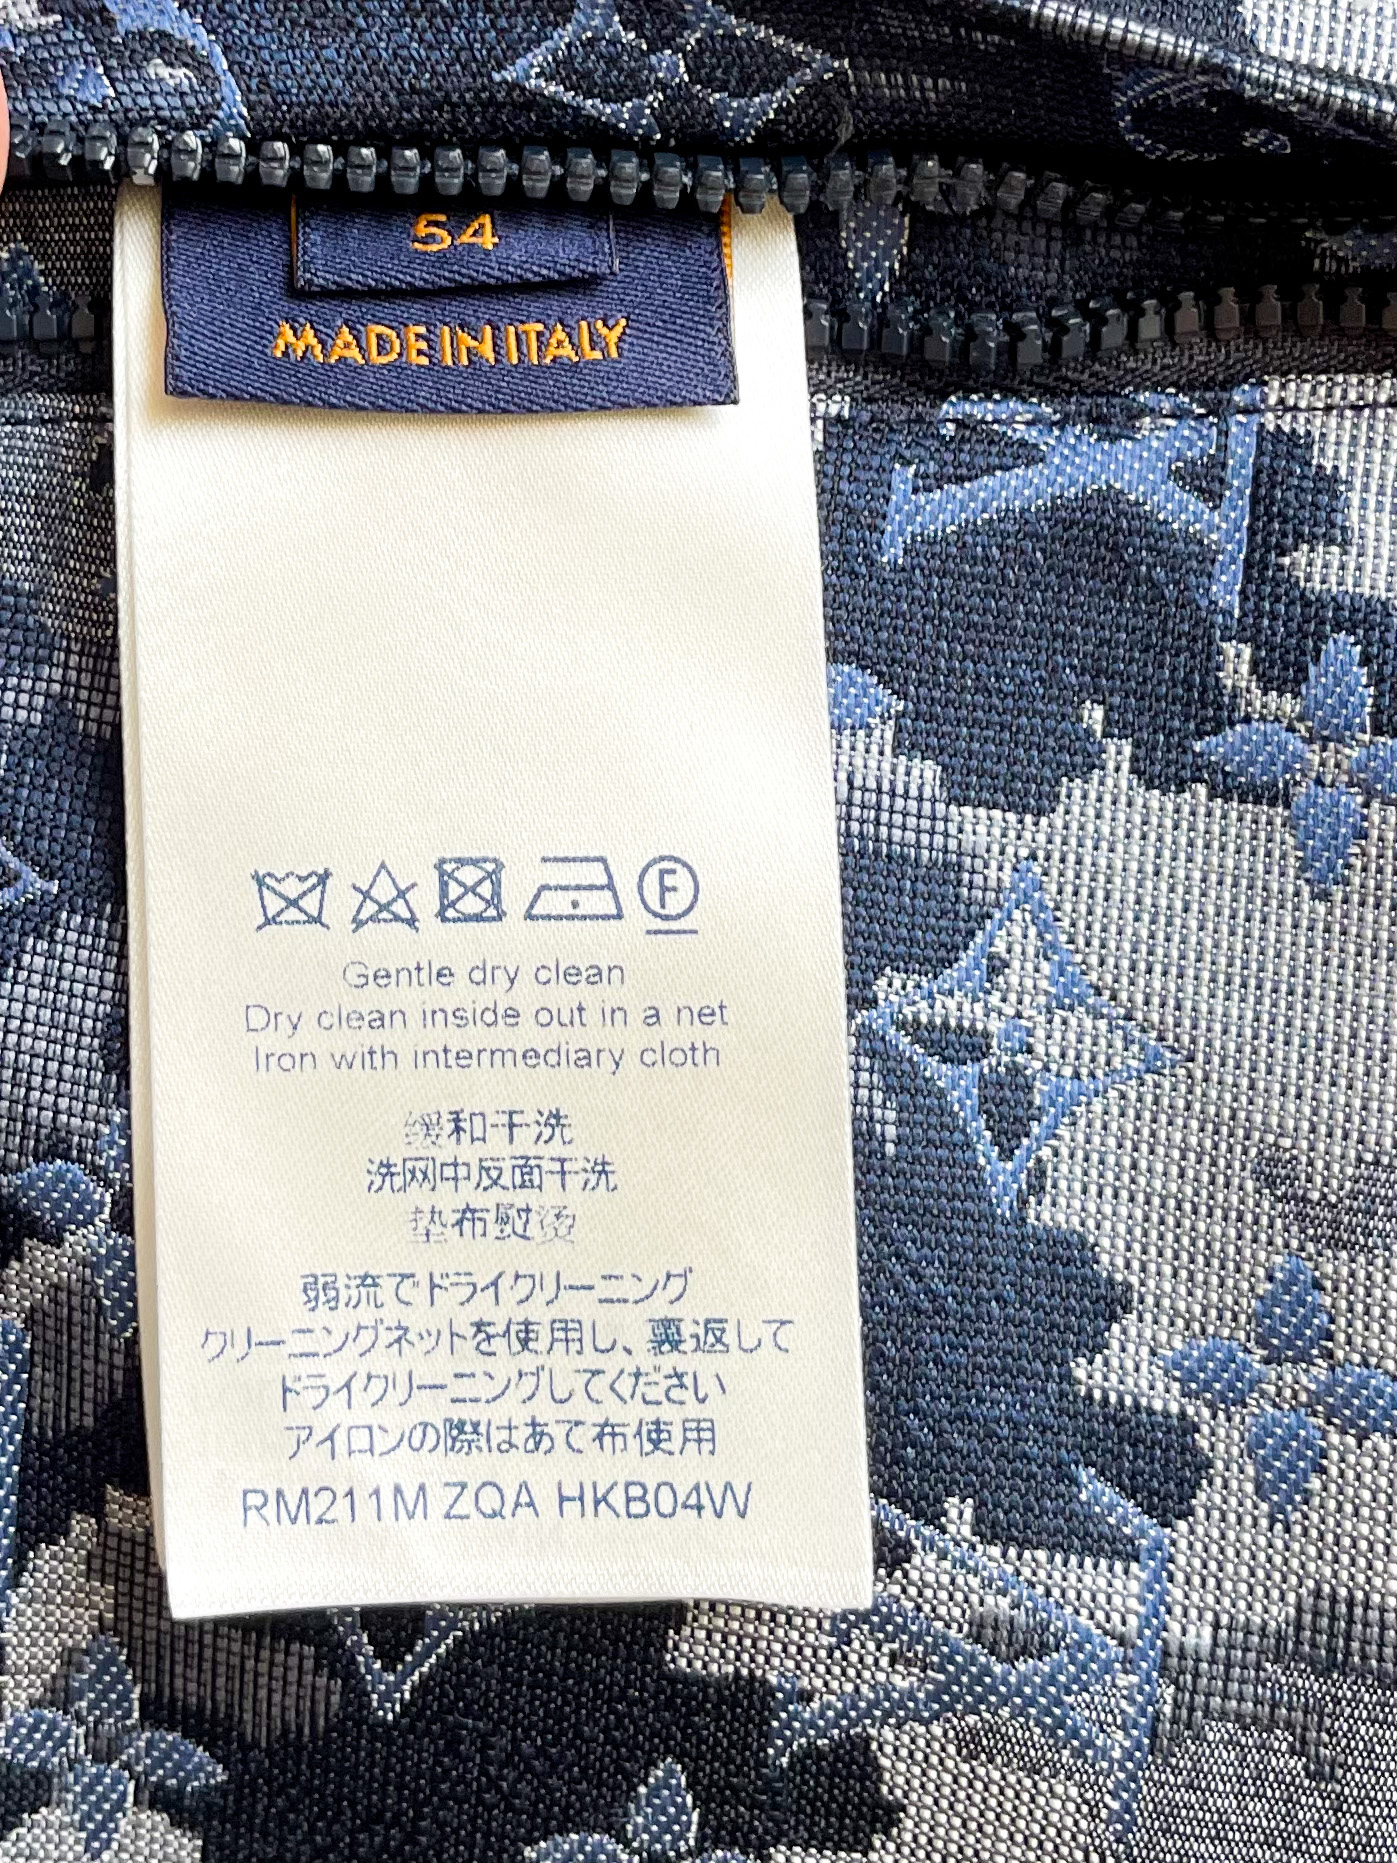 Louis Vuitton 2020 Monogram Tapestry Windbreaker w/ Tags - Blue Outerwear,  Clothing - LOU433337